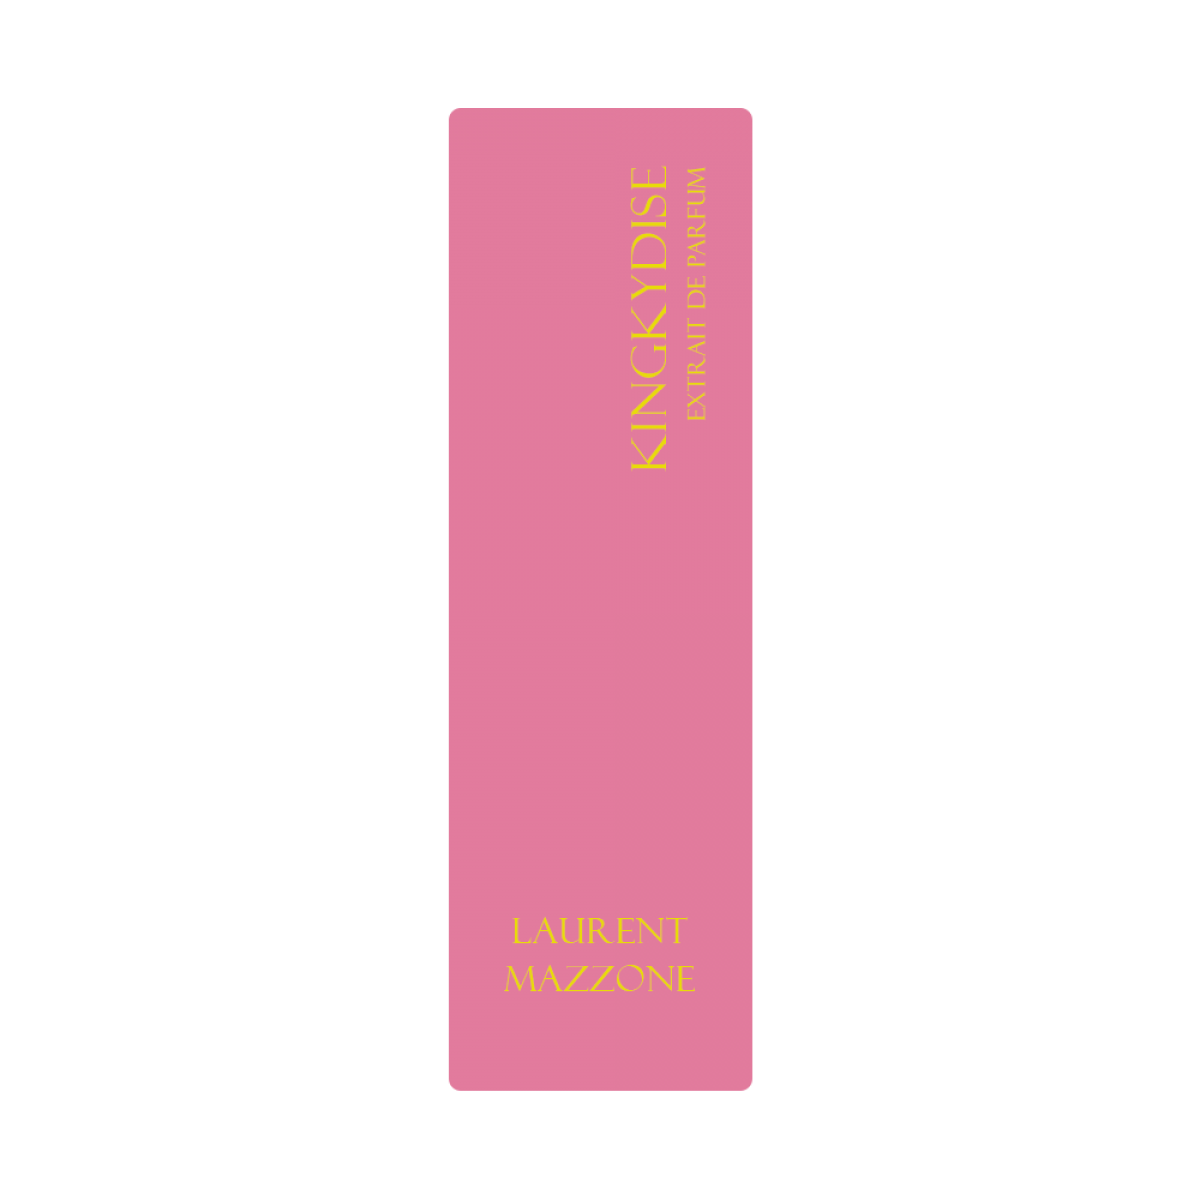 SAMPLE KINGKYDISE - LM Parfums